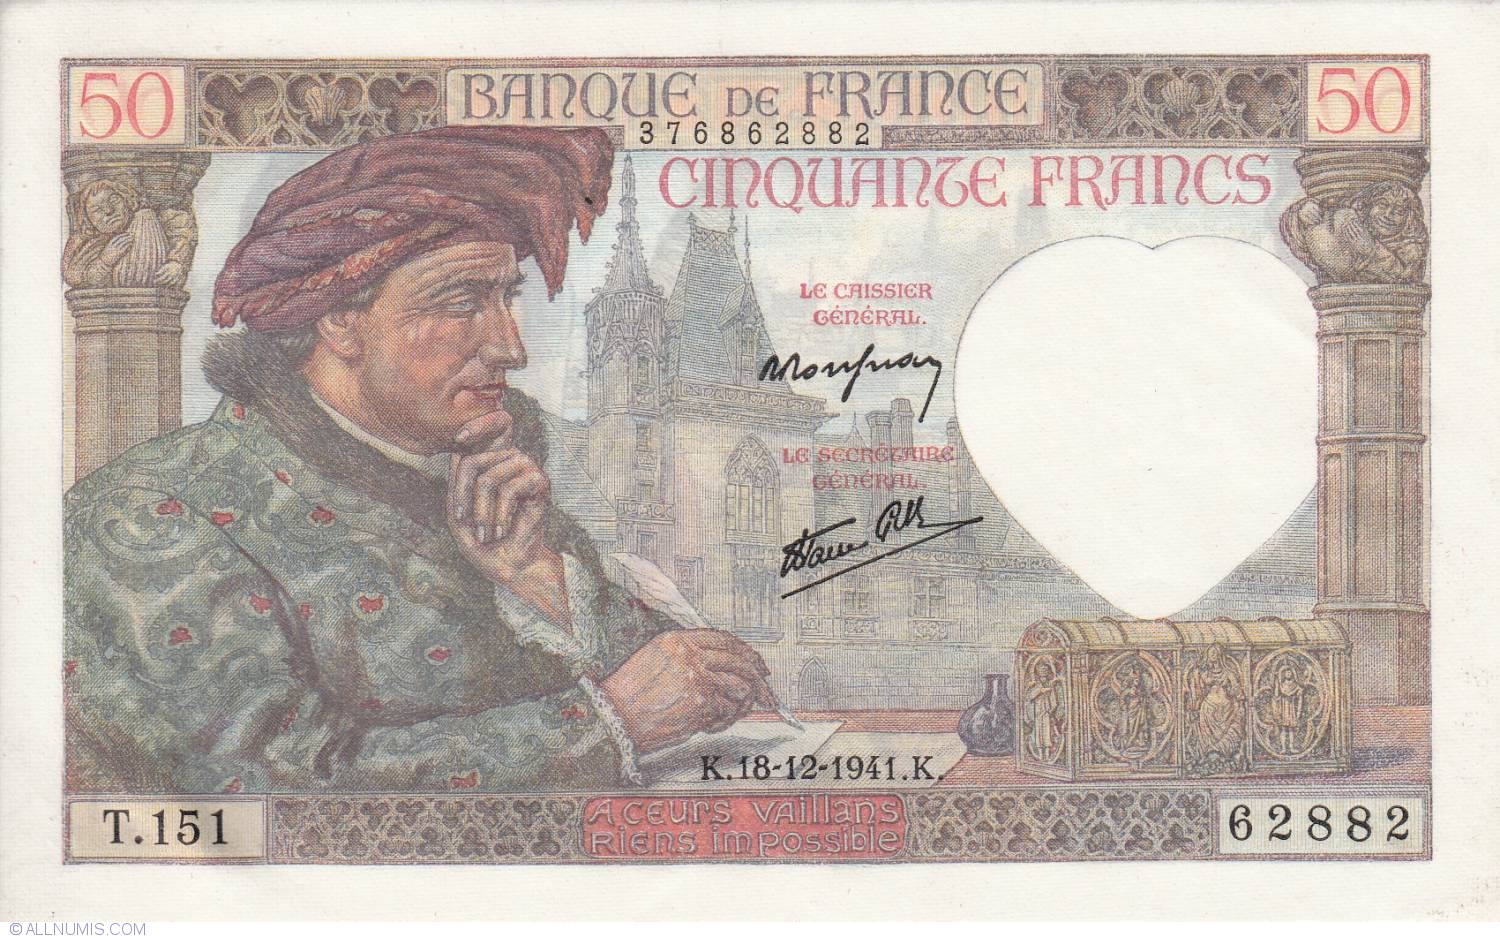 50 Francs 1941 (18. XII.), 1940-1942 Issue - Francs - France - Banknote